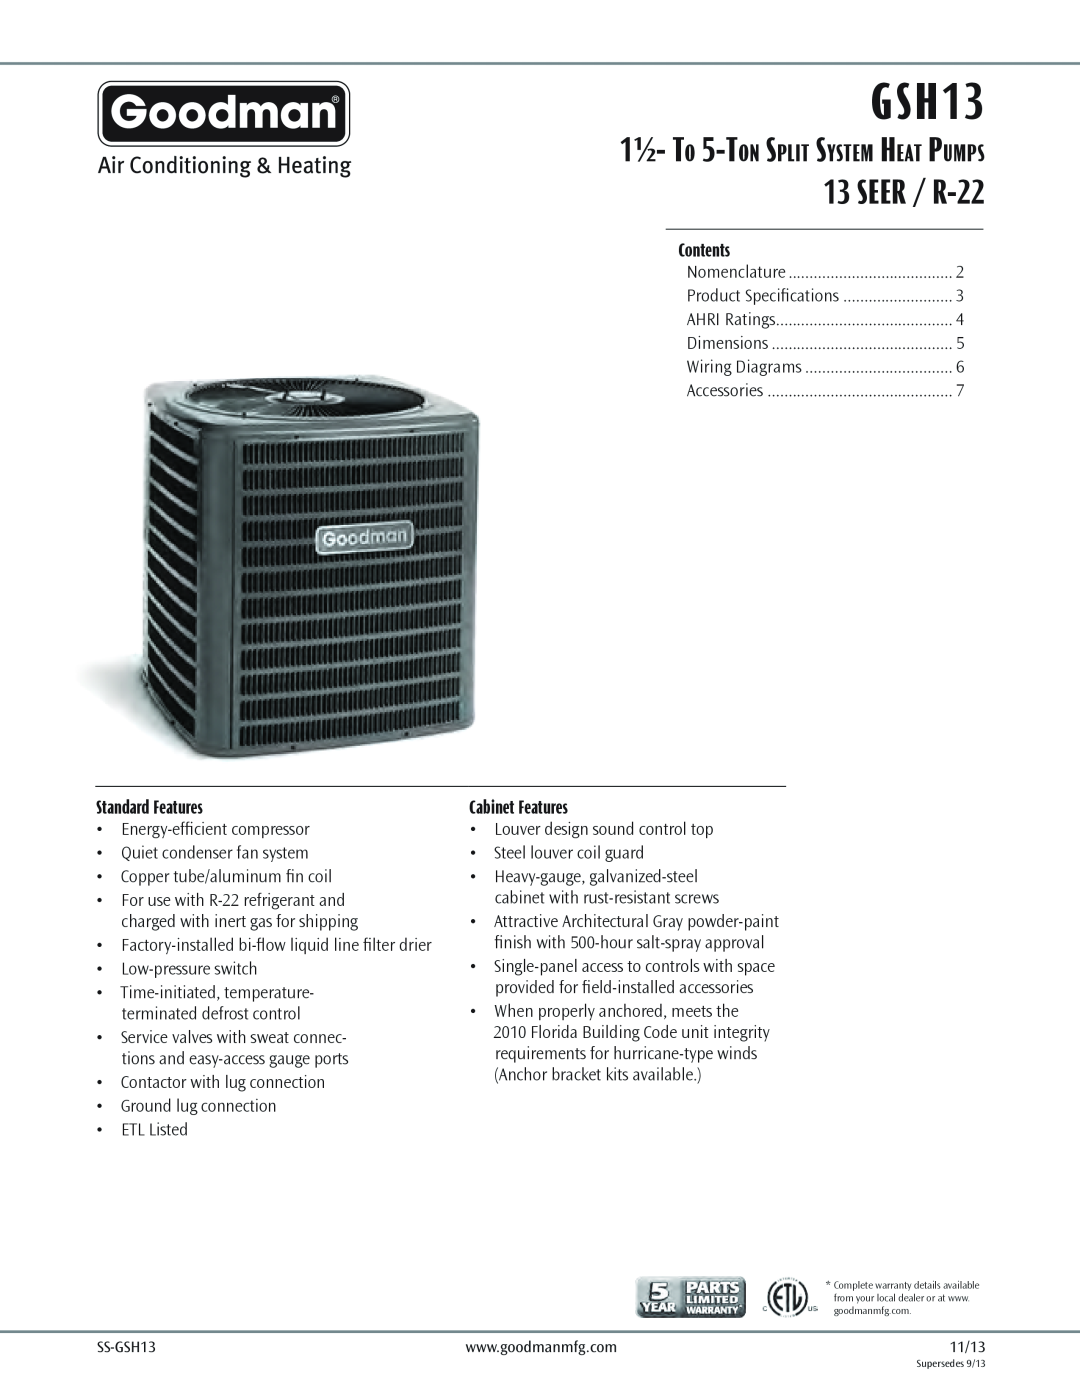 Goodman Mfg GSH13 warranty SEER / R-22, 1½- To 5-Ton Split System Heat Pumps, Contents, Standard Features 